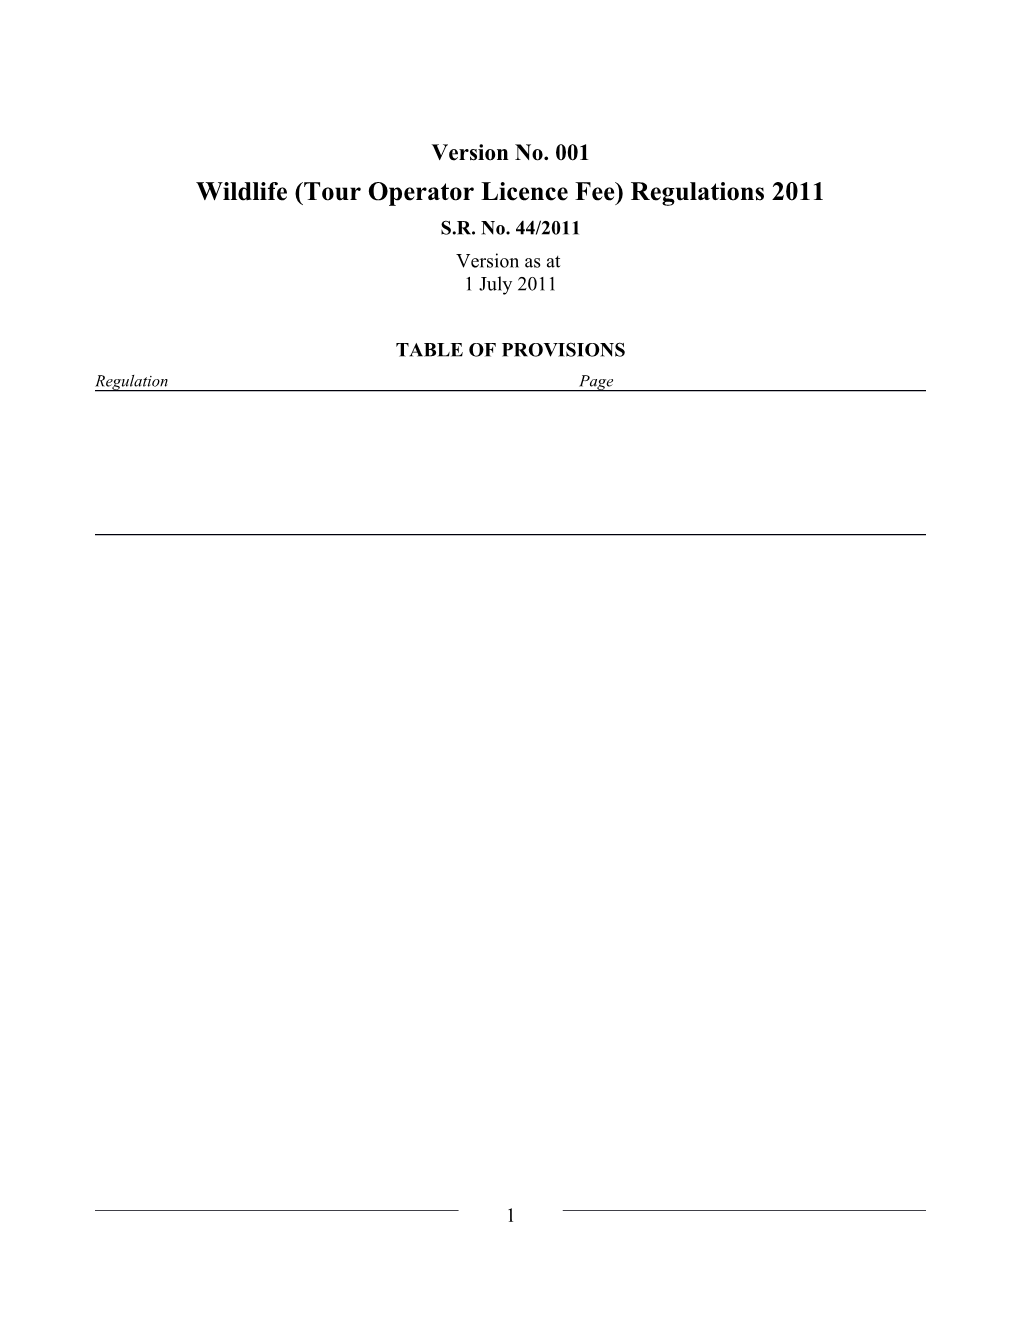 Wildlife (Tour Operator Licence Fee) Regulations 2011